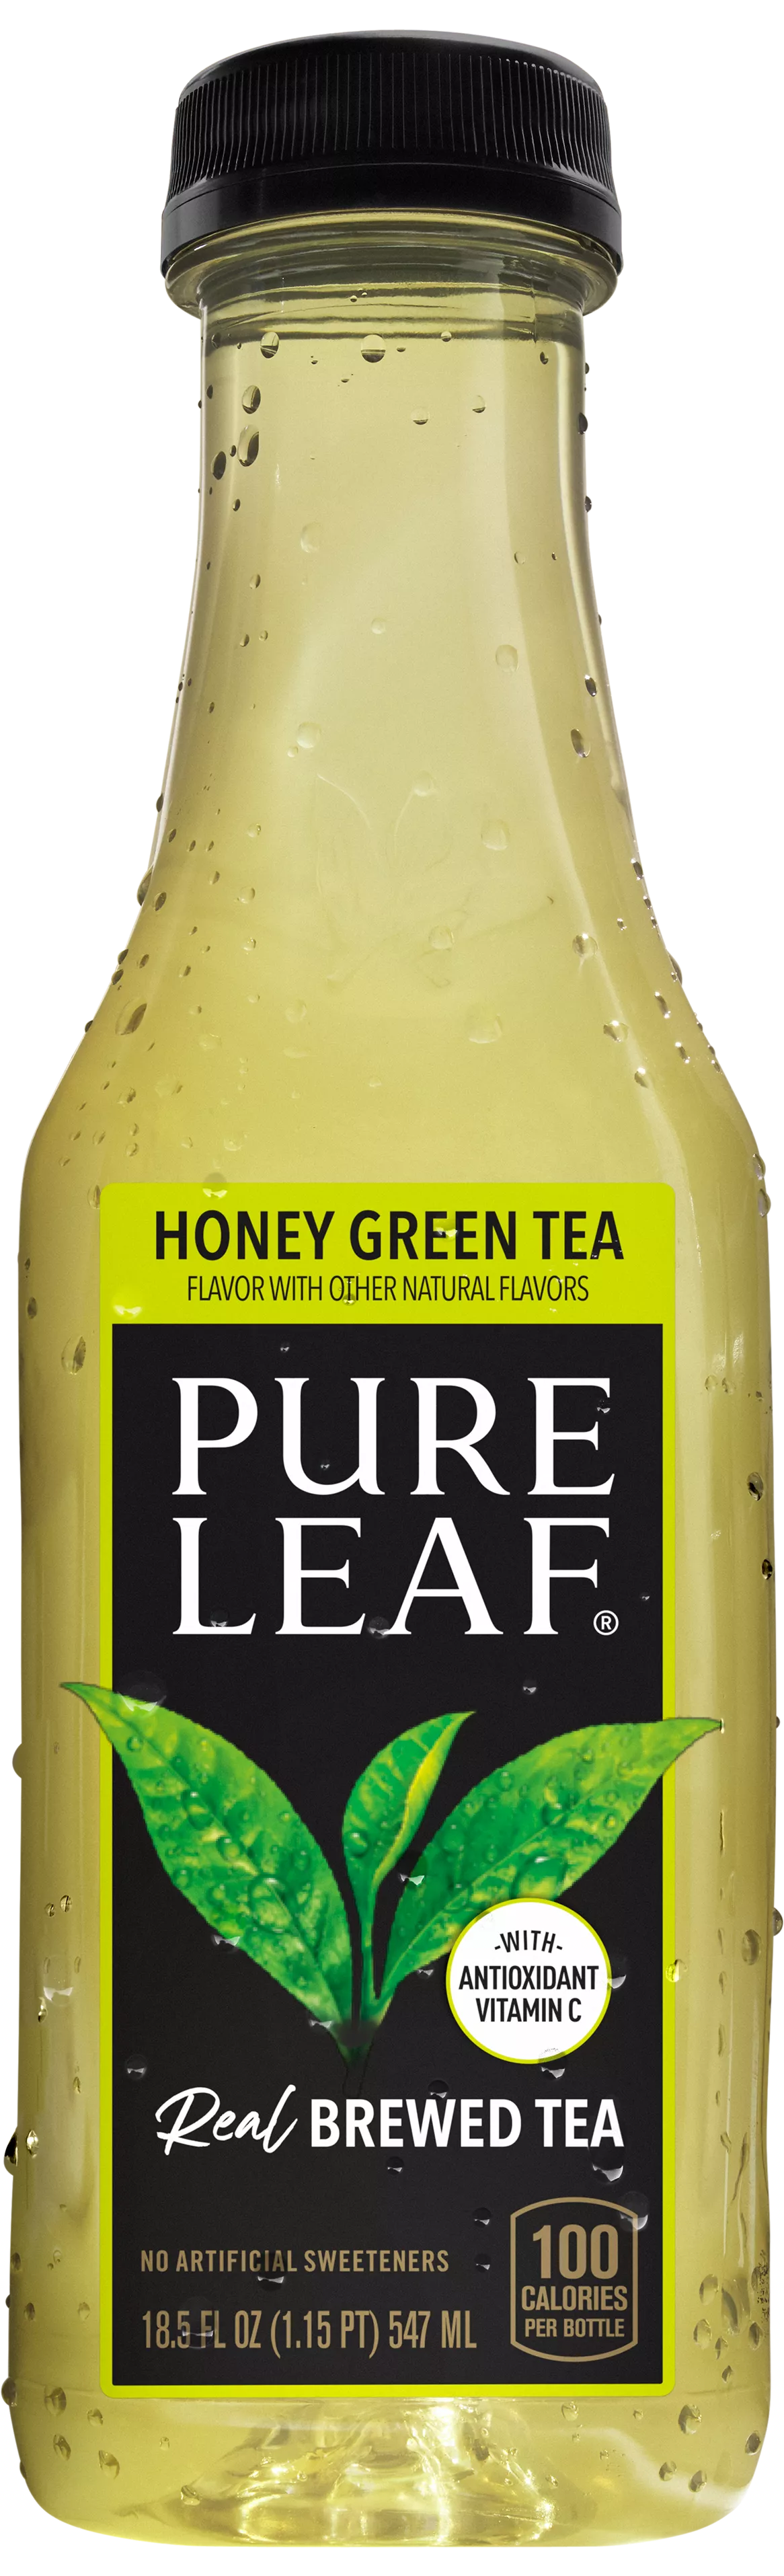  Pure leaf Iced Tea, Unsweetened, Real Brewed Tea (64 oz  Bottle) : Grocery & Gourmet Food